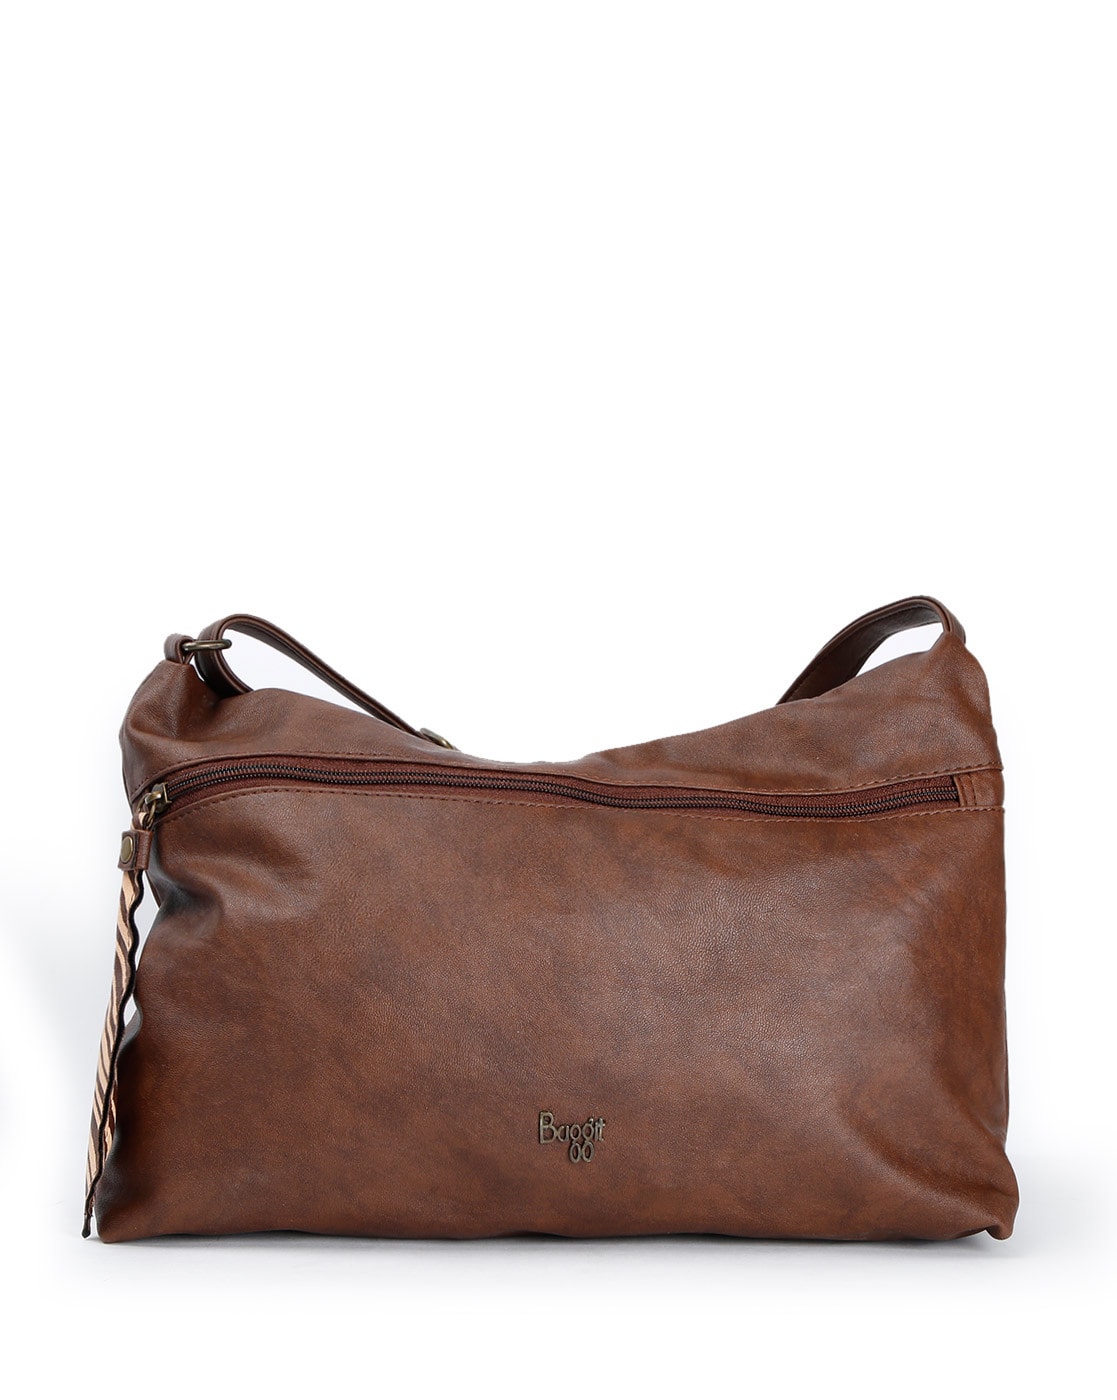 Buy Black Handbags for Women by Lavie Online | Ajio.com